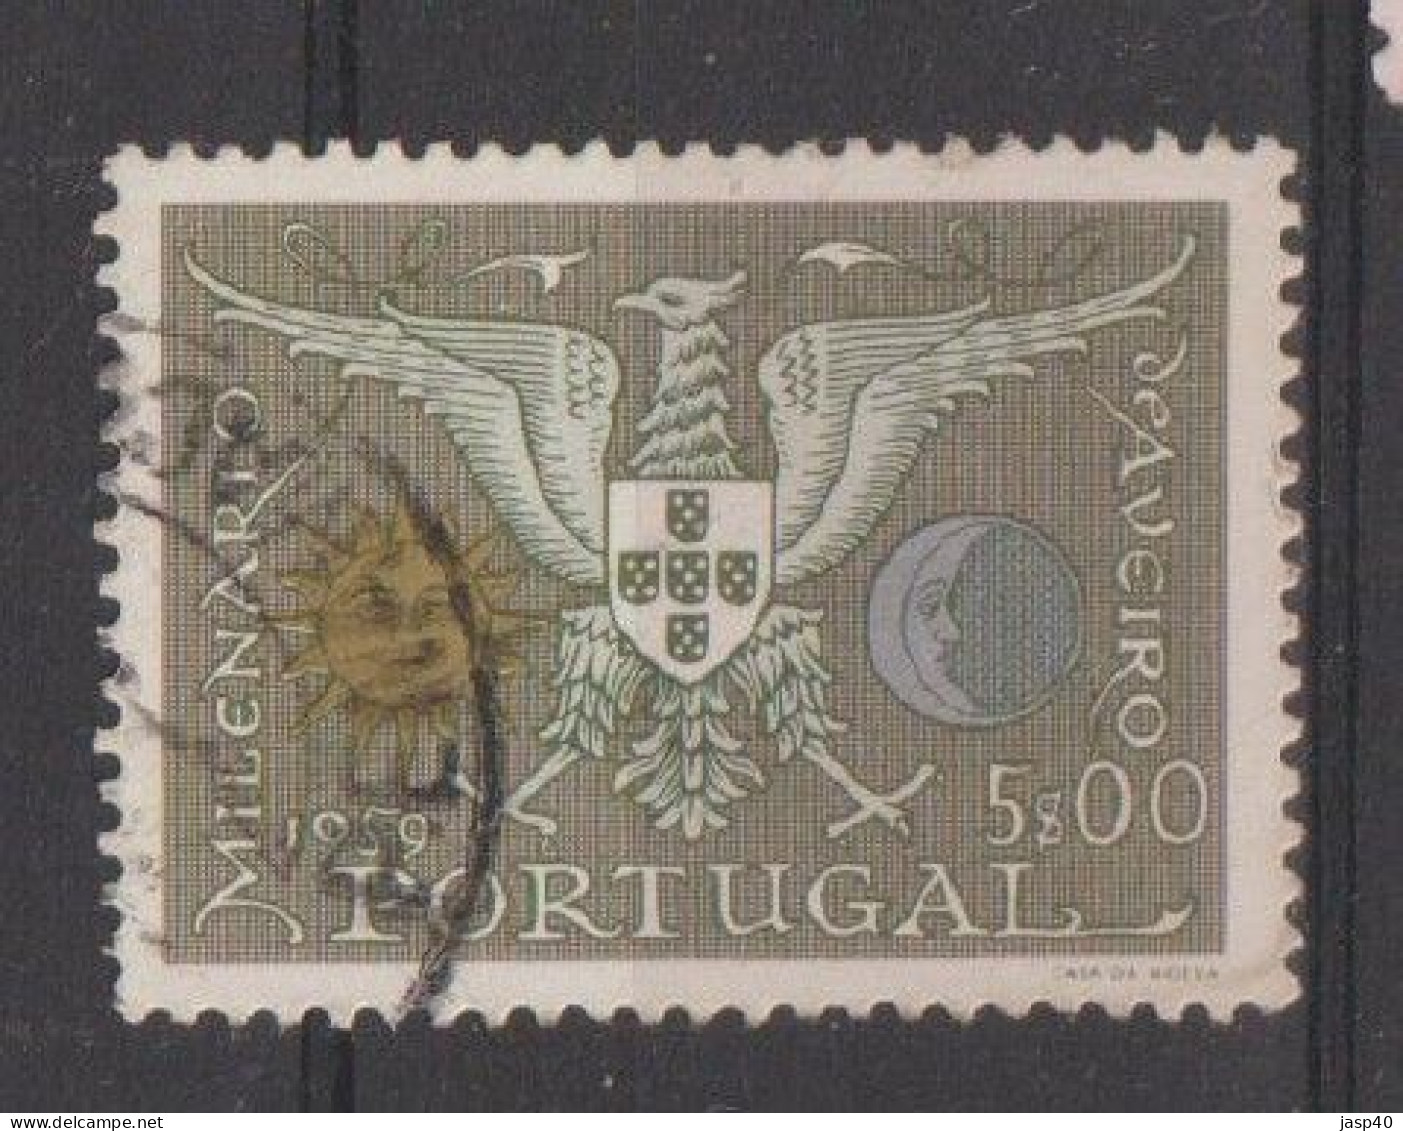 PORTUGAL 848 - POSTMARKS OF PORTUGAL - PENAMACOR - Gebraucht